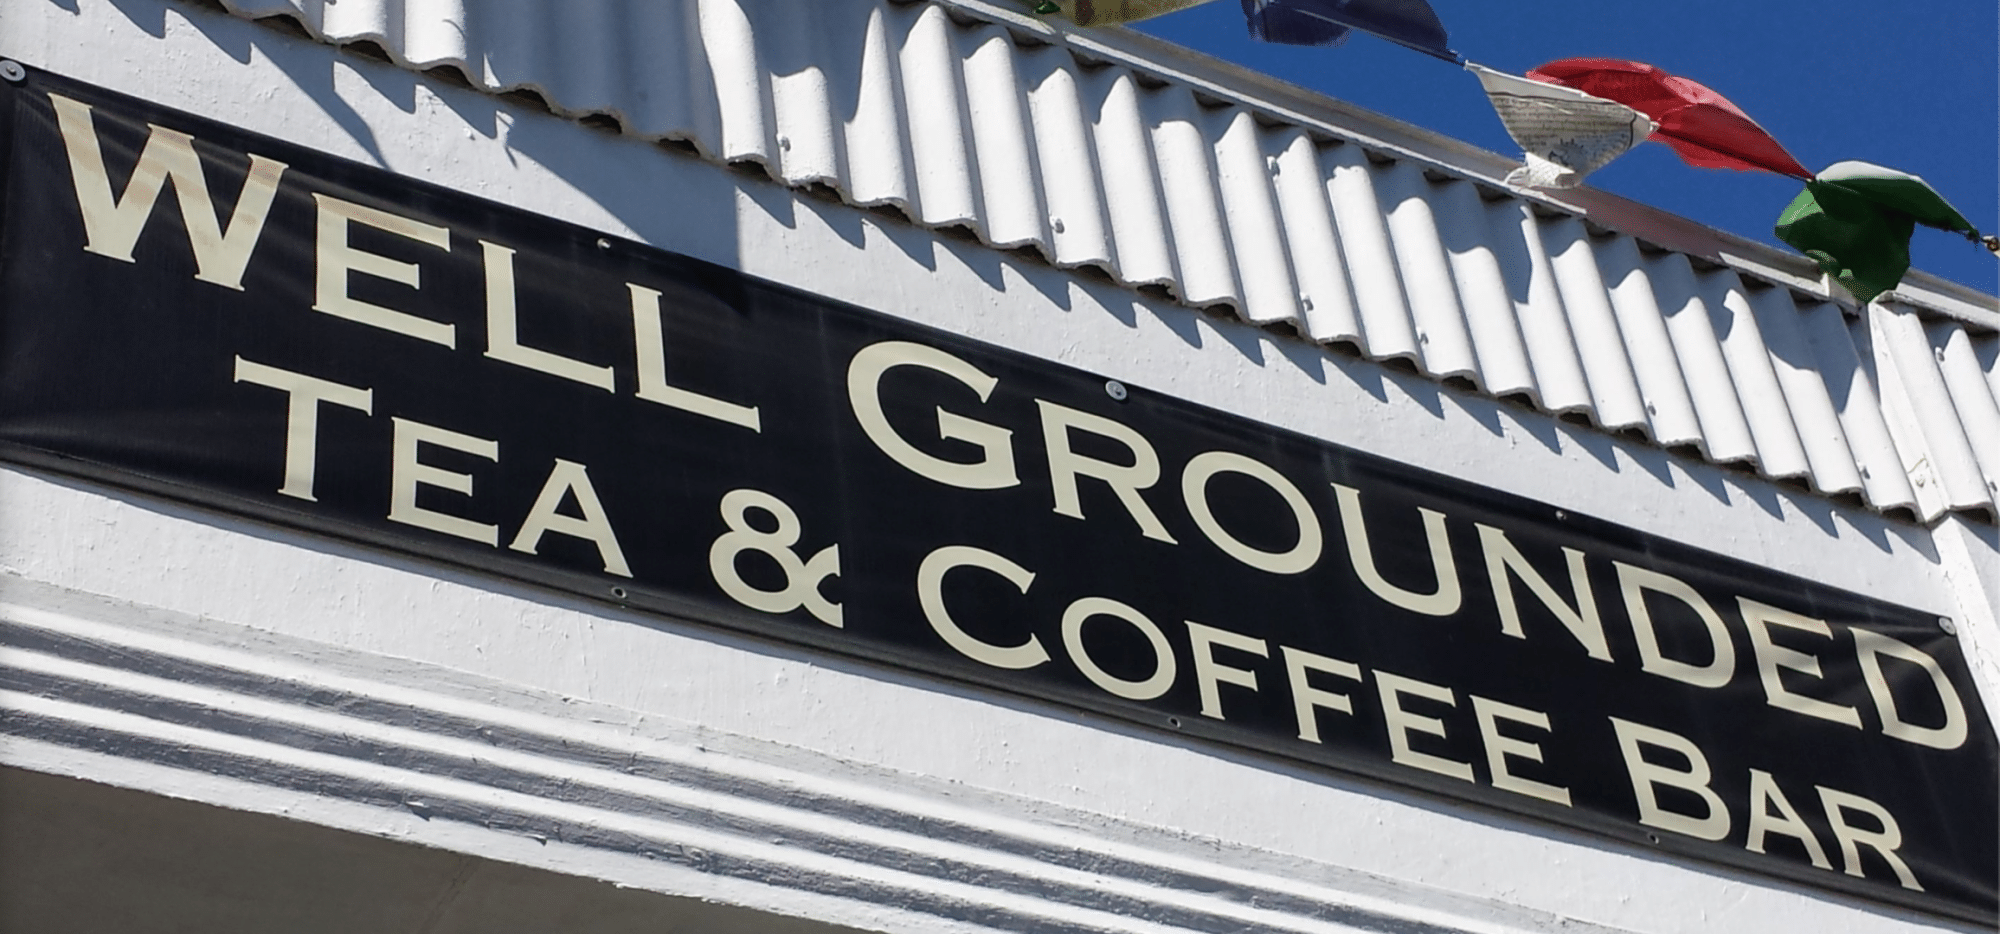 Well Grounded Tea & Coffee Bar